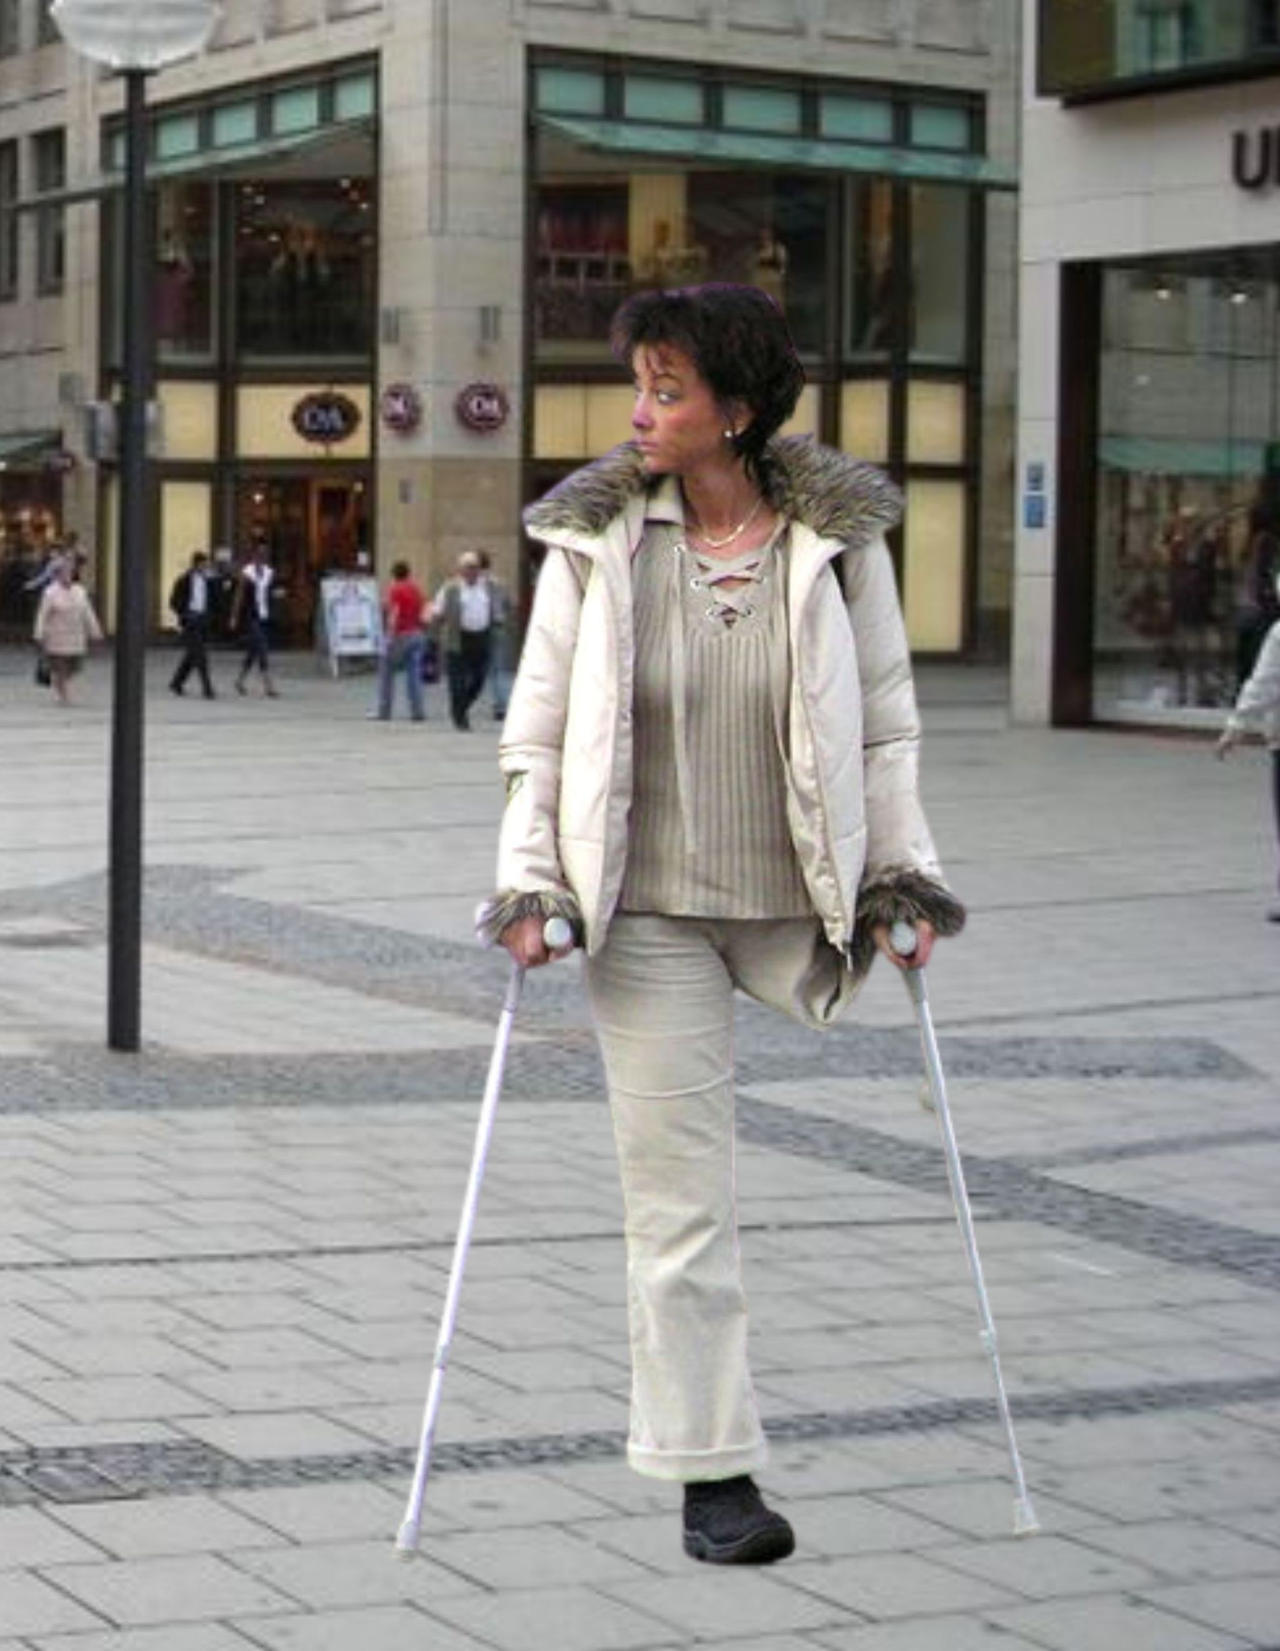 A great one-legged woman by Ippldatsch on DeviantArt